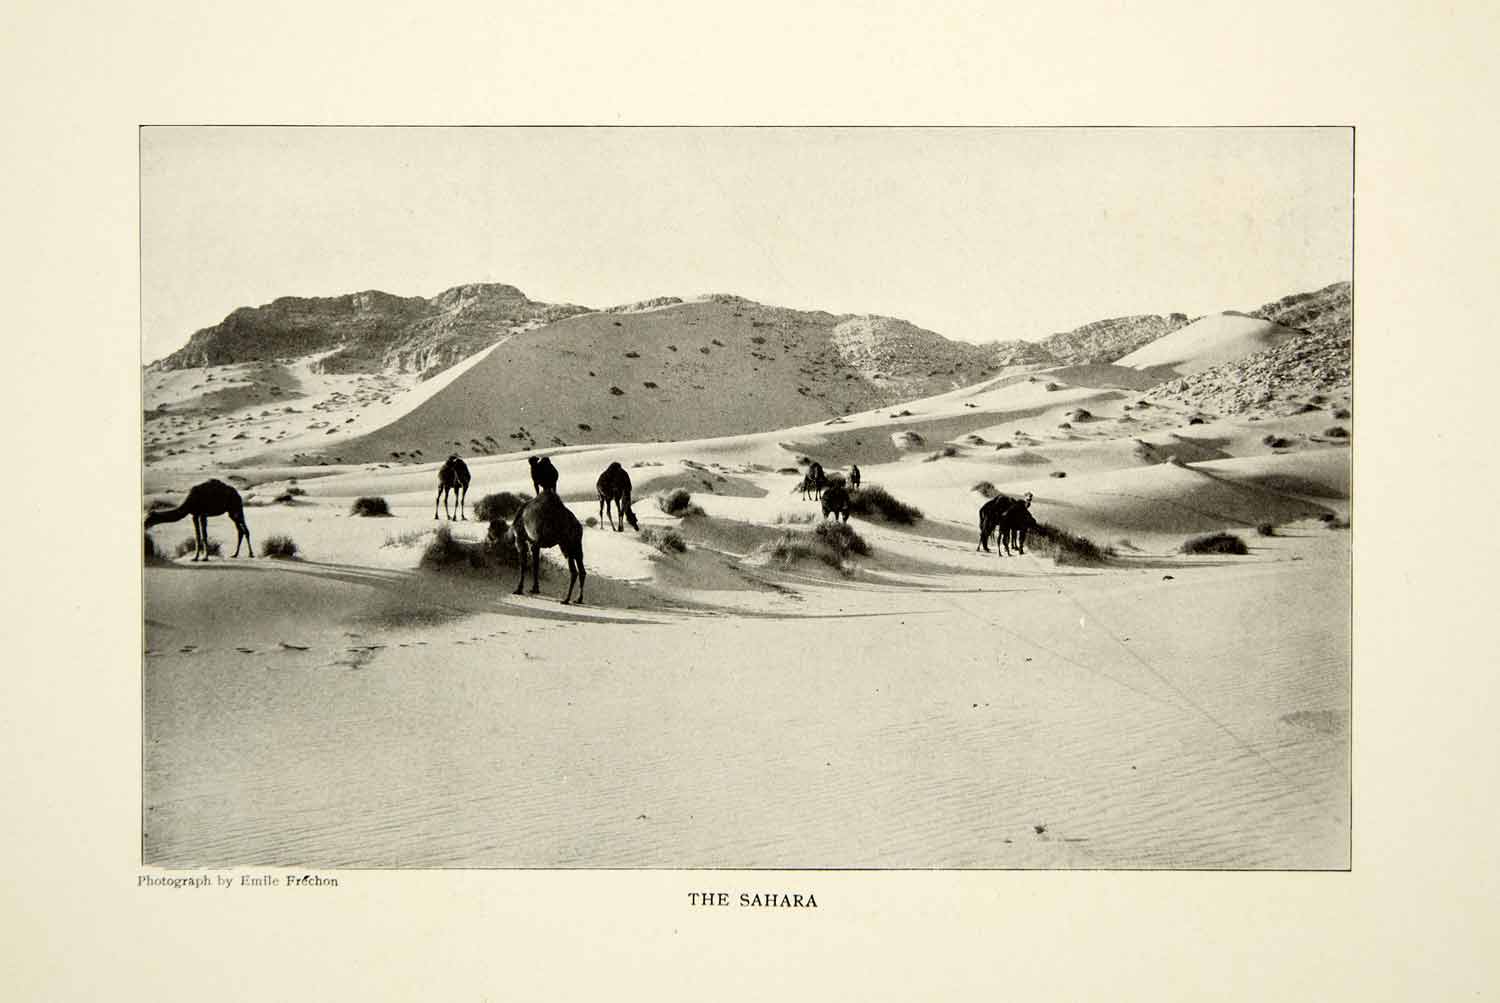 1903 Print Algeria Sahara Desert Landscape Camels Animals Historical Image XGFD2